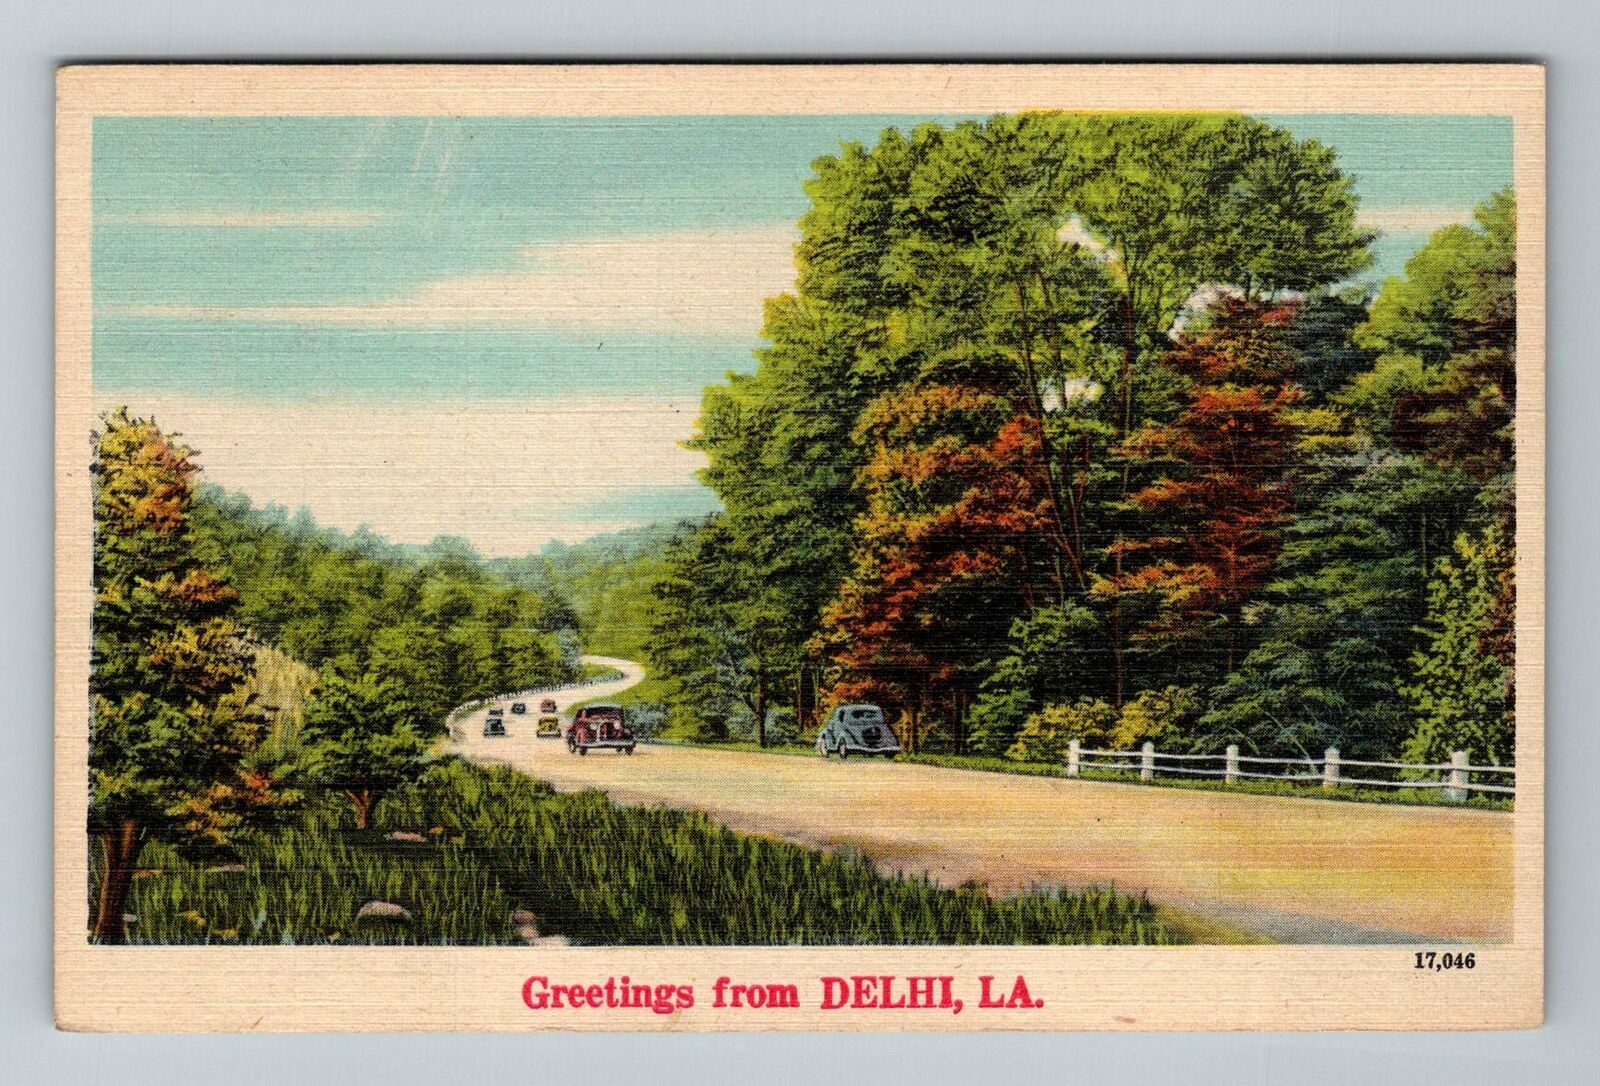 Delhi LA-Louisiana Greetings Scenic Roadway Period Cars Vintage Postcard